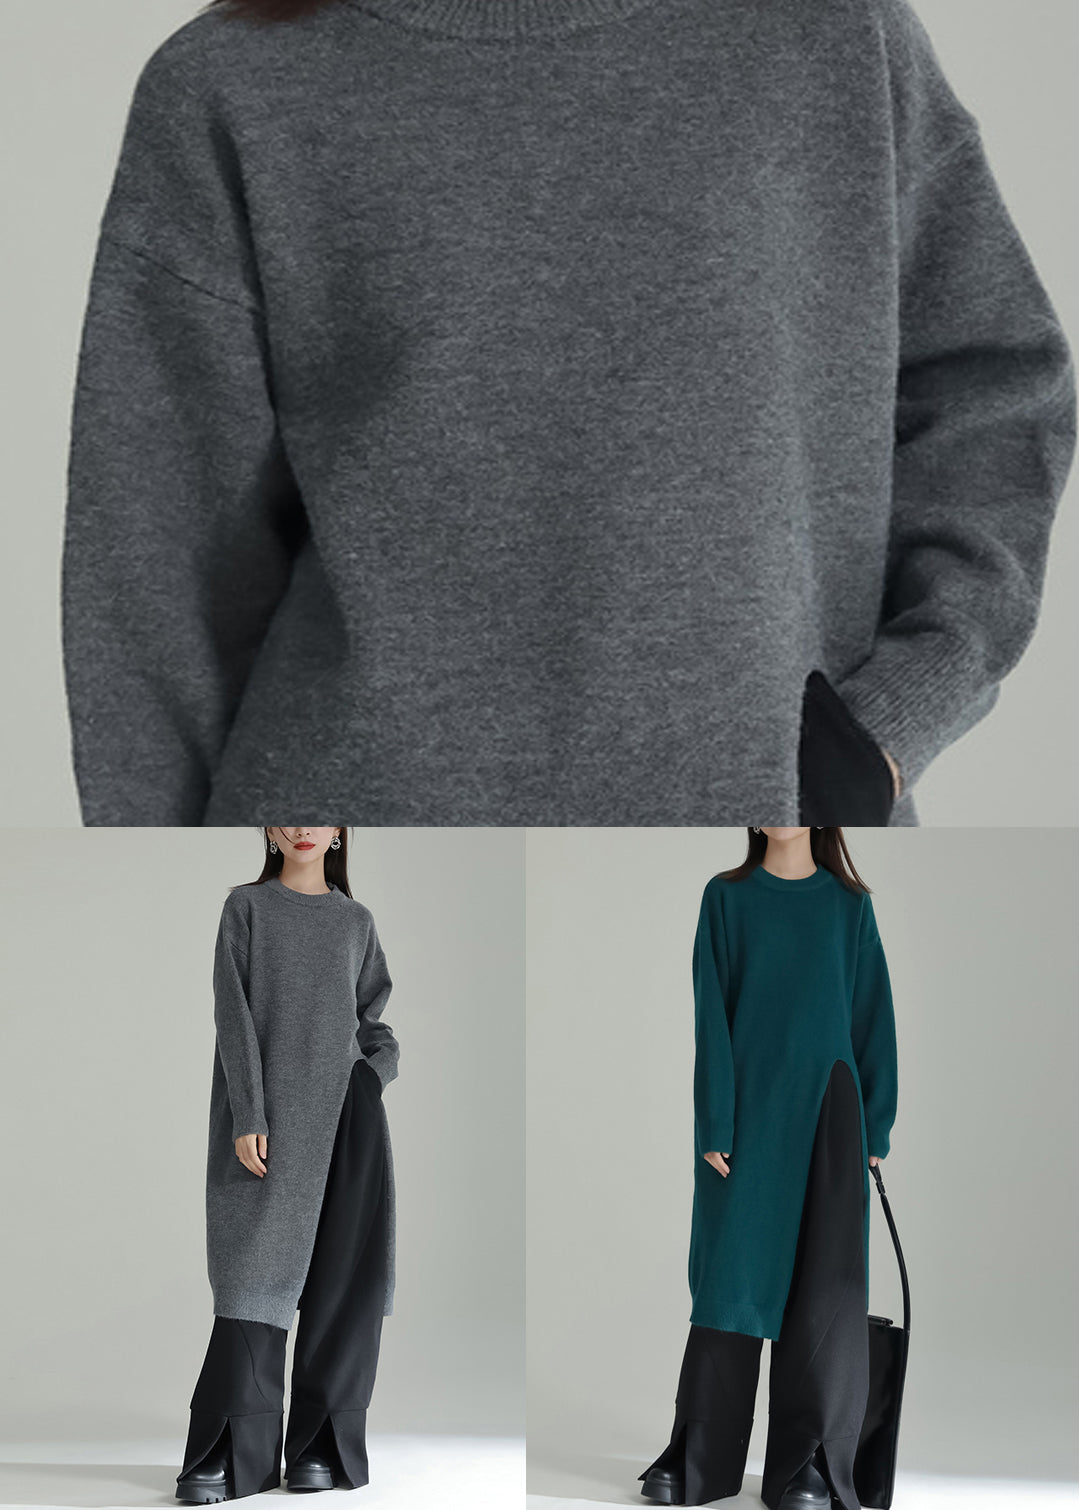 Italian Grey O Neck Side Open Patchwork Knit Dresses Winter